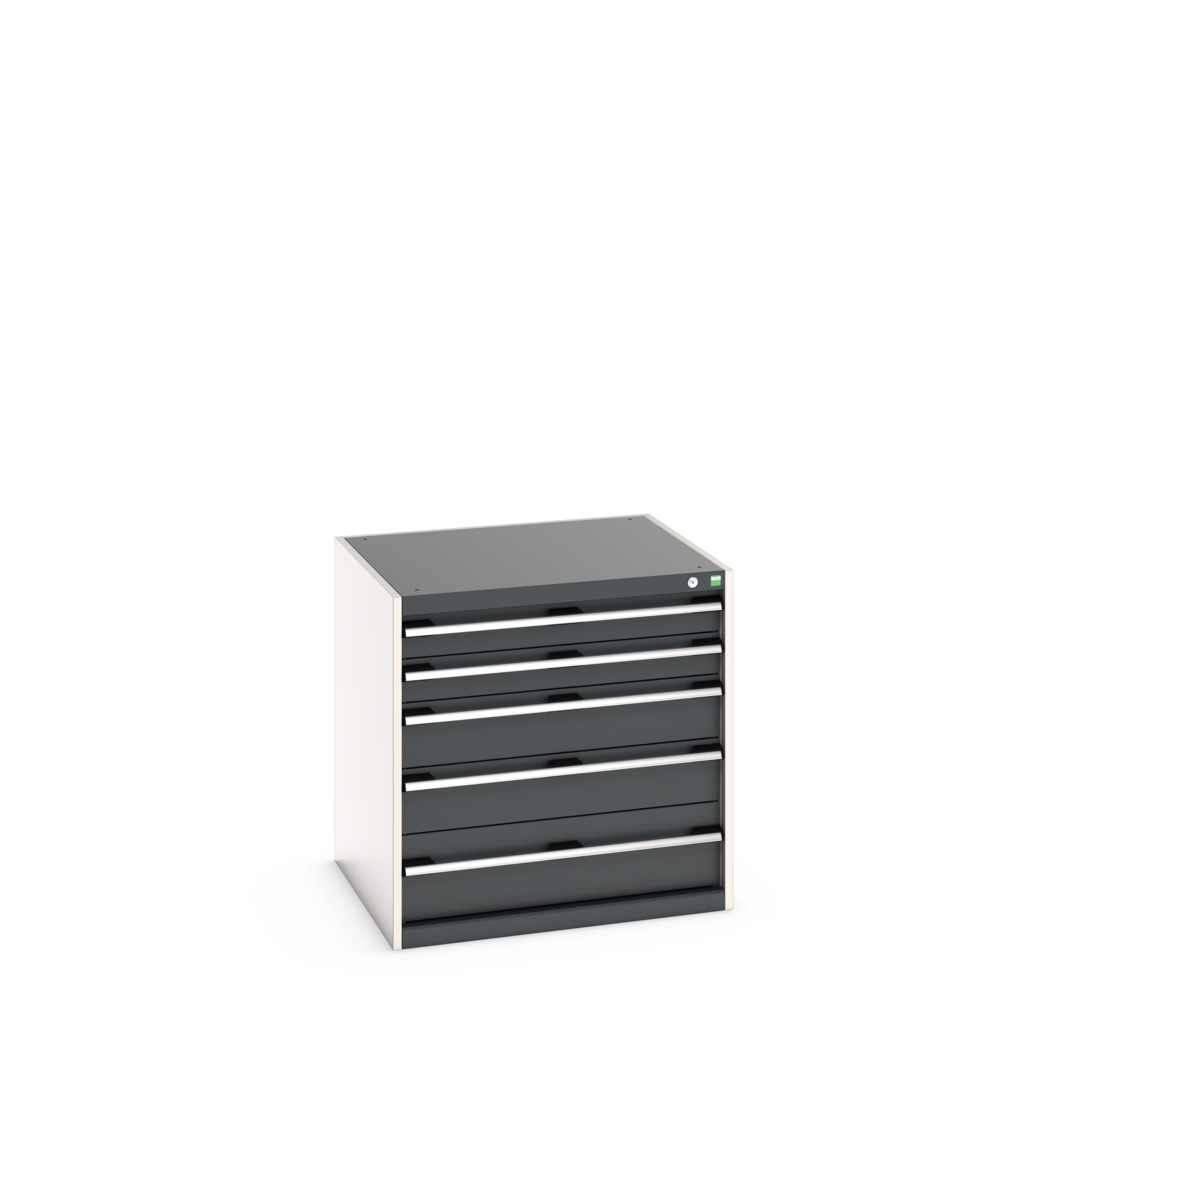 40028011. - cubio drawer cabinet 